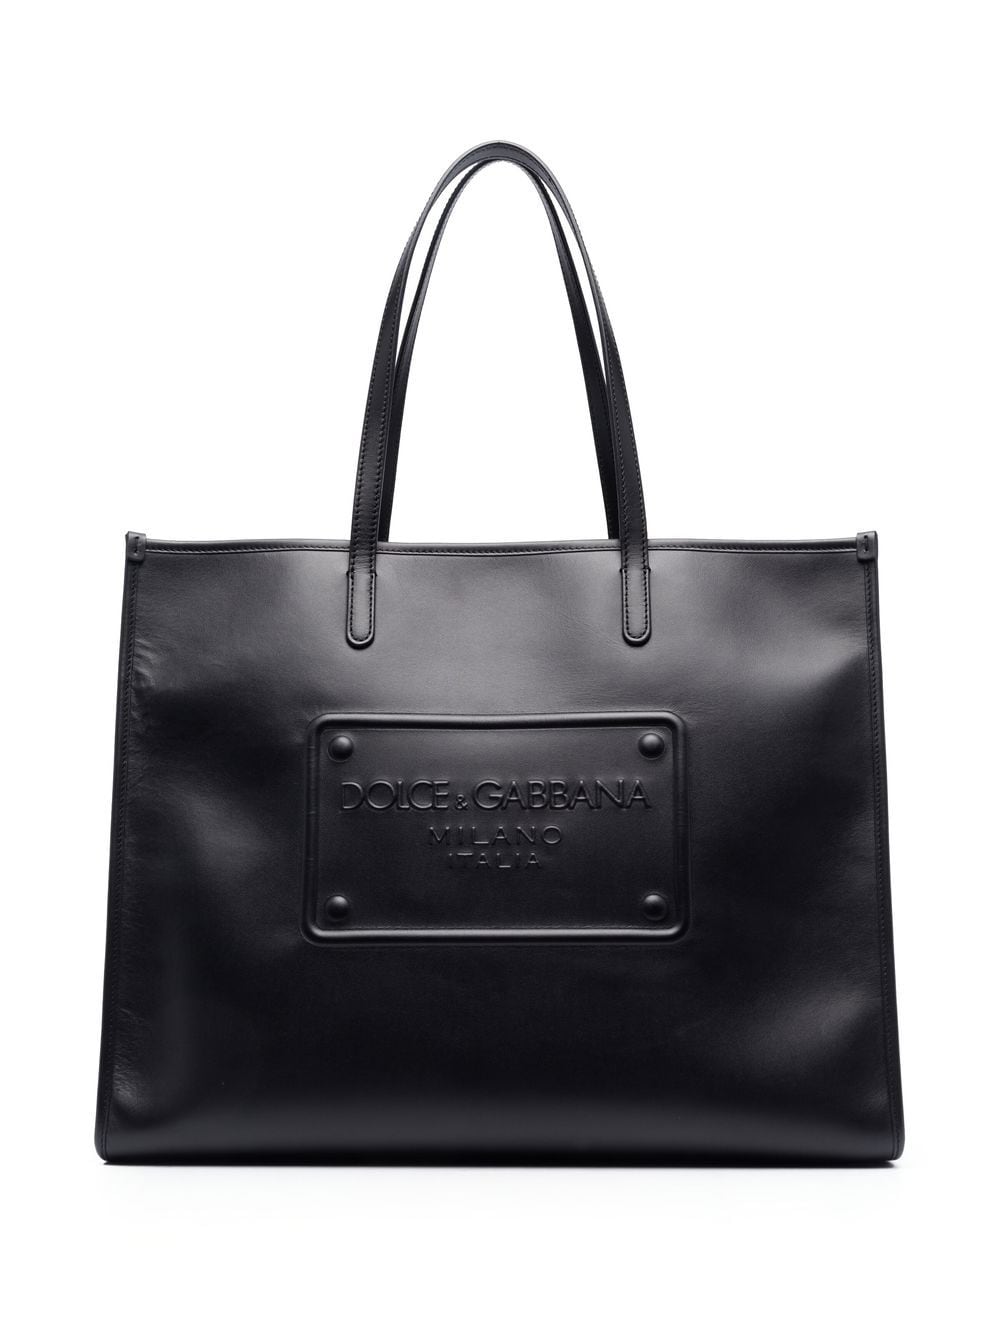 Dolce & Gabbana Logo Embossed Shopping Tote In Black